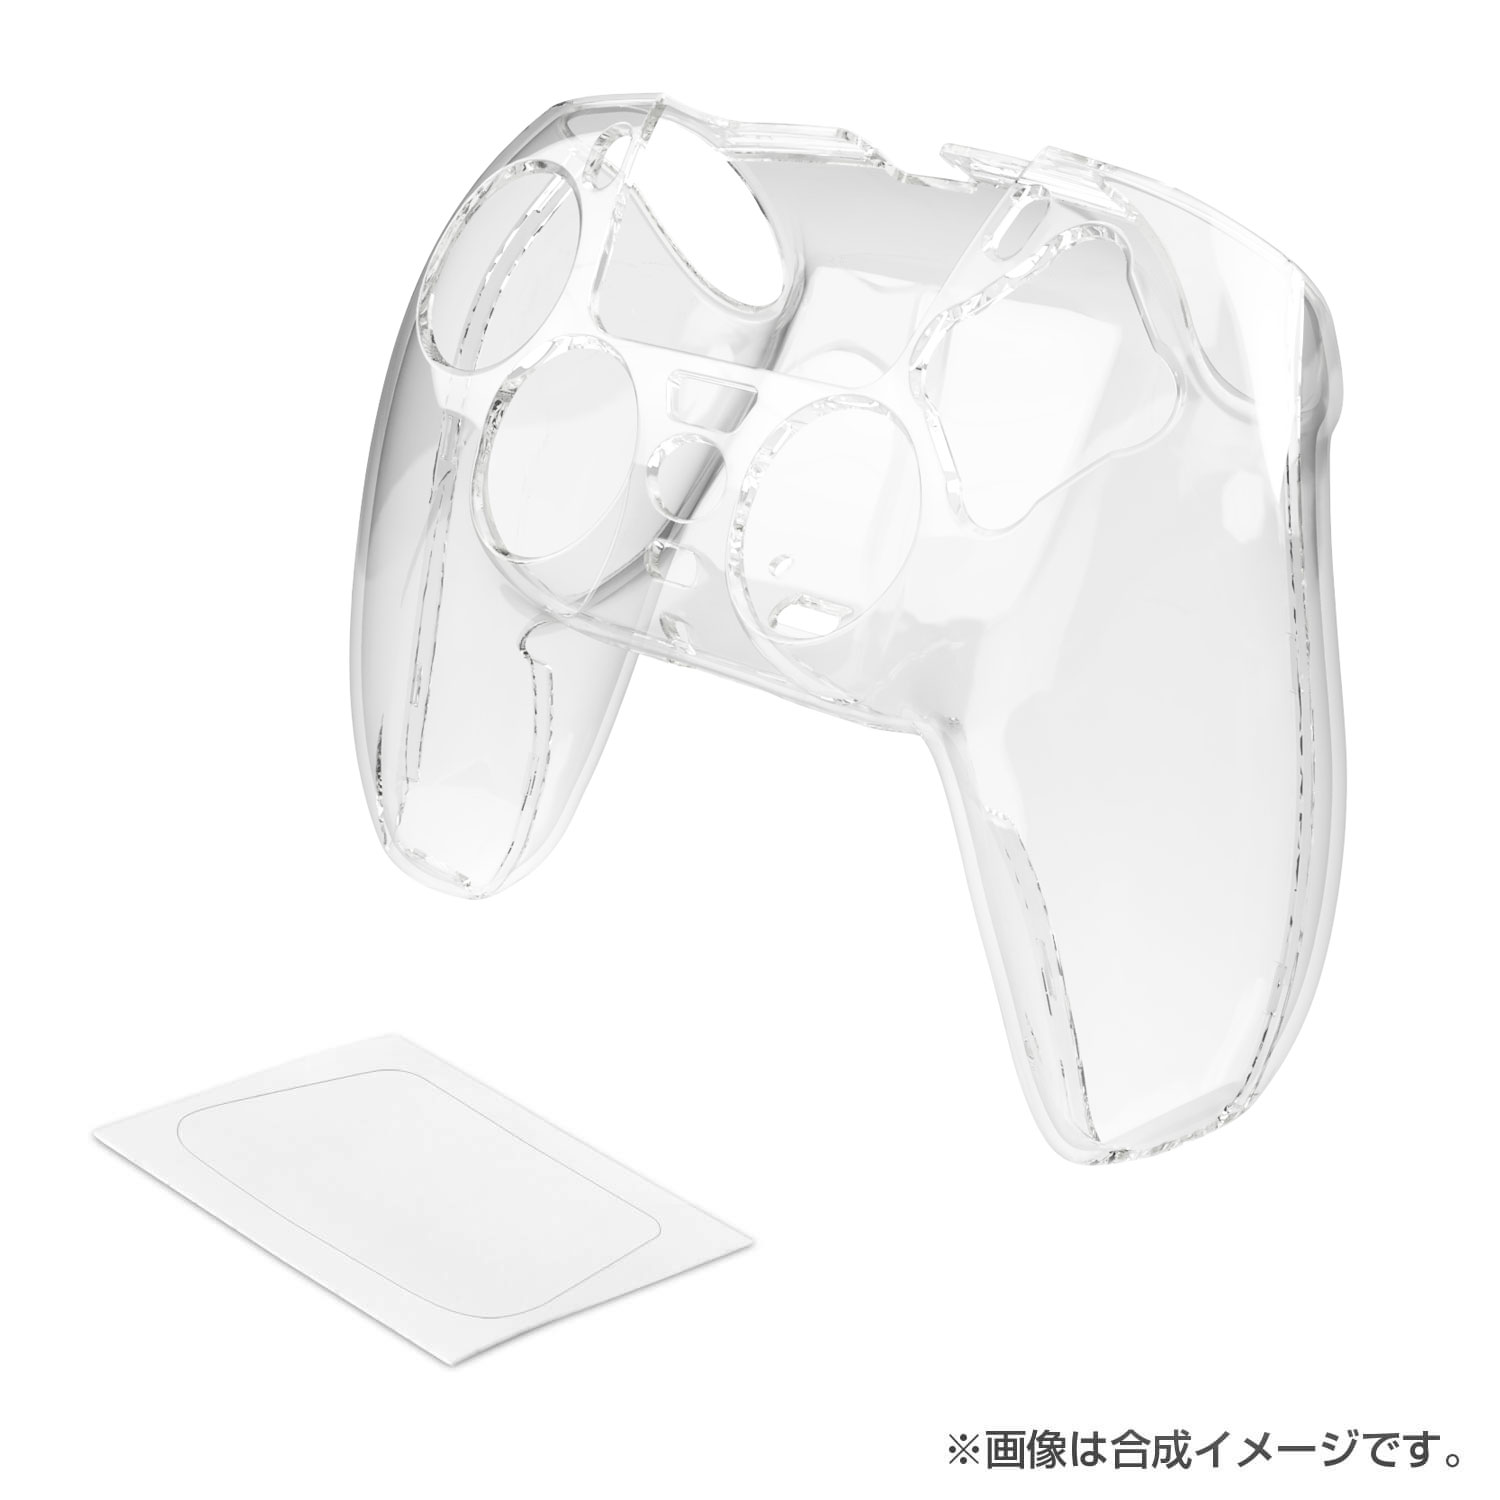 PS5コントローラー用保護カバー「クリスタルカバー5」1月28日発売 - GAME Watch